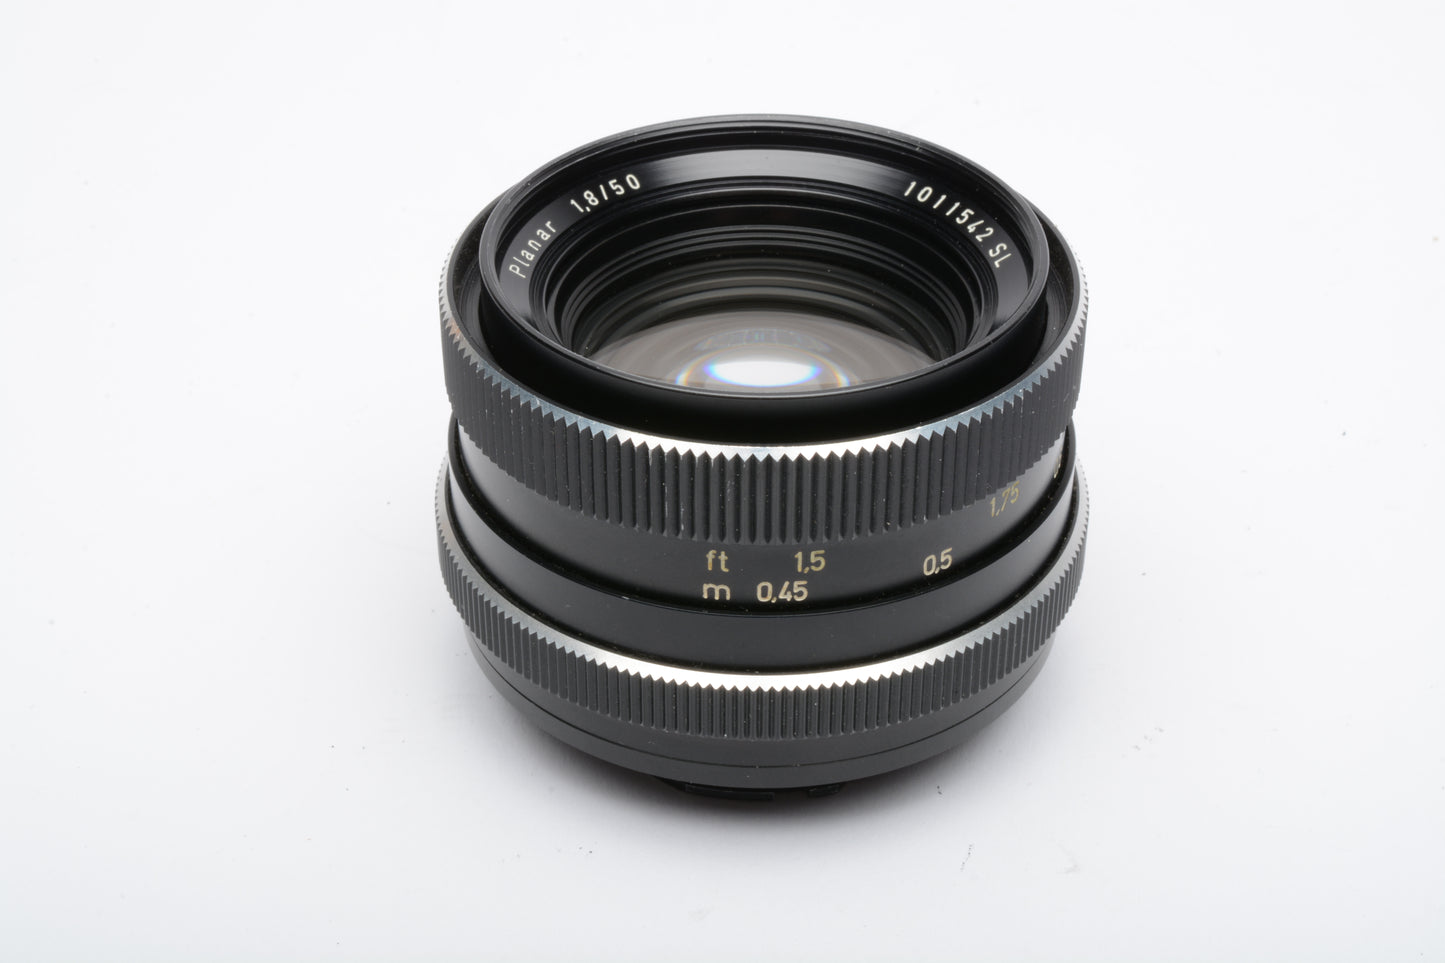 Rollei Planar 50mm F1.8 Prime Lens for Rollei QBM SL35 Series Cameras, Nice!